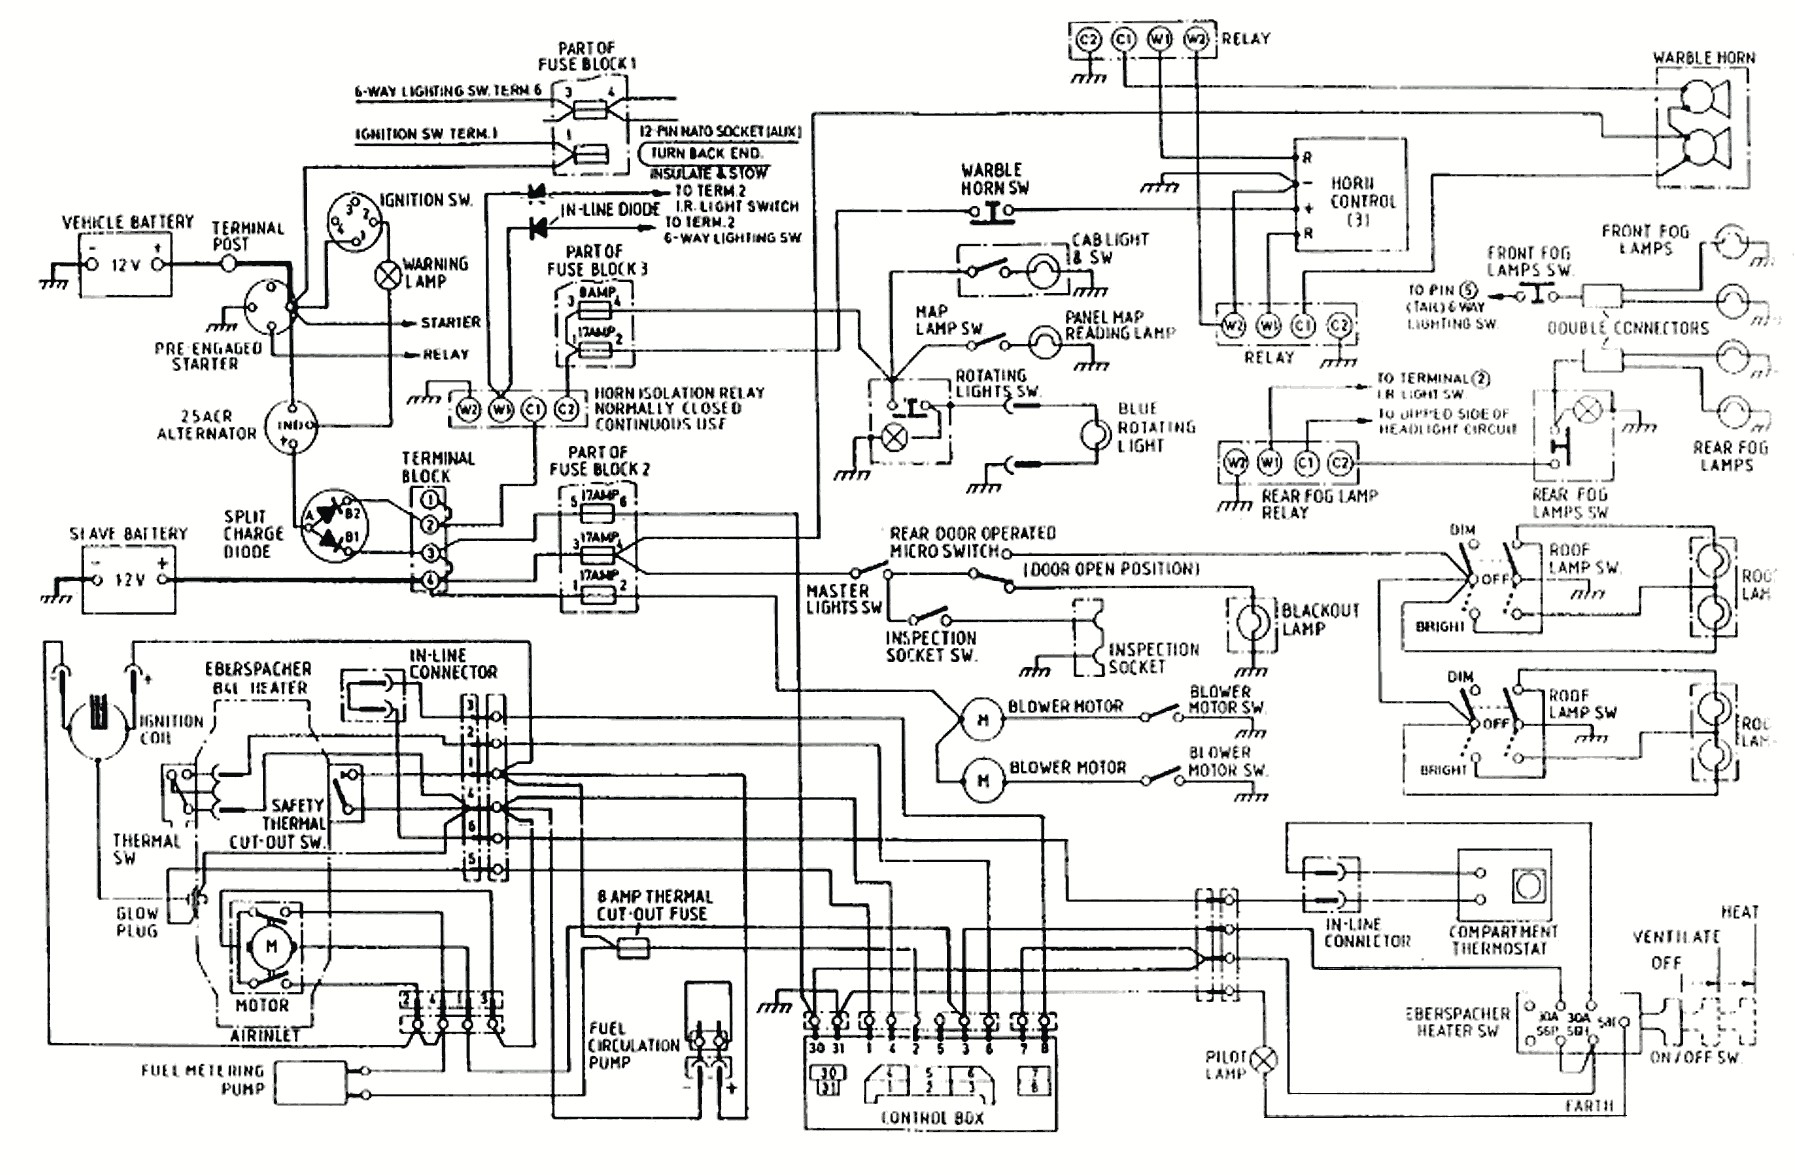 2000 ford Explorer Parts Diagram Wiring Diagram Fuse Drawings Wiring Info • Of 2000 ford Explorer Parts Diagram